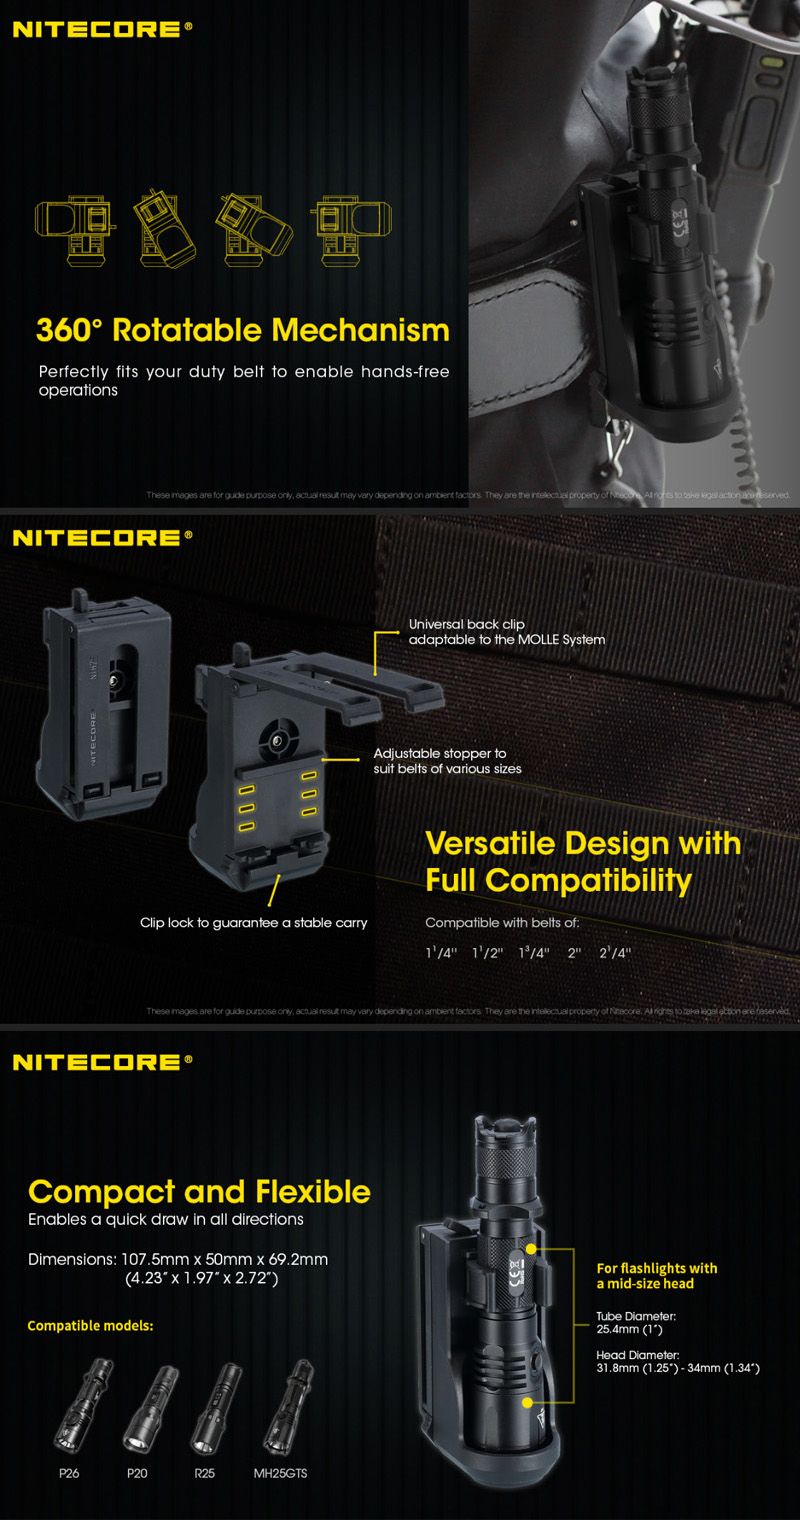 NITECORE-NTH25-Flashlight-Holder-Waist-Clip-360deg-Rotate-1581166